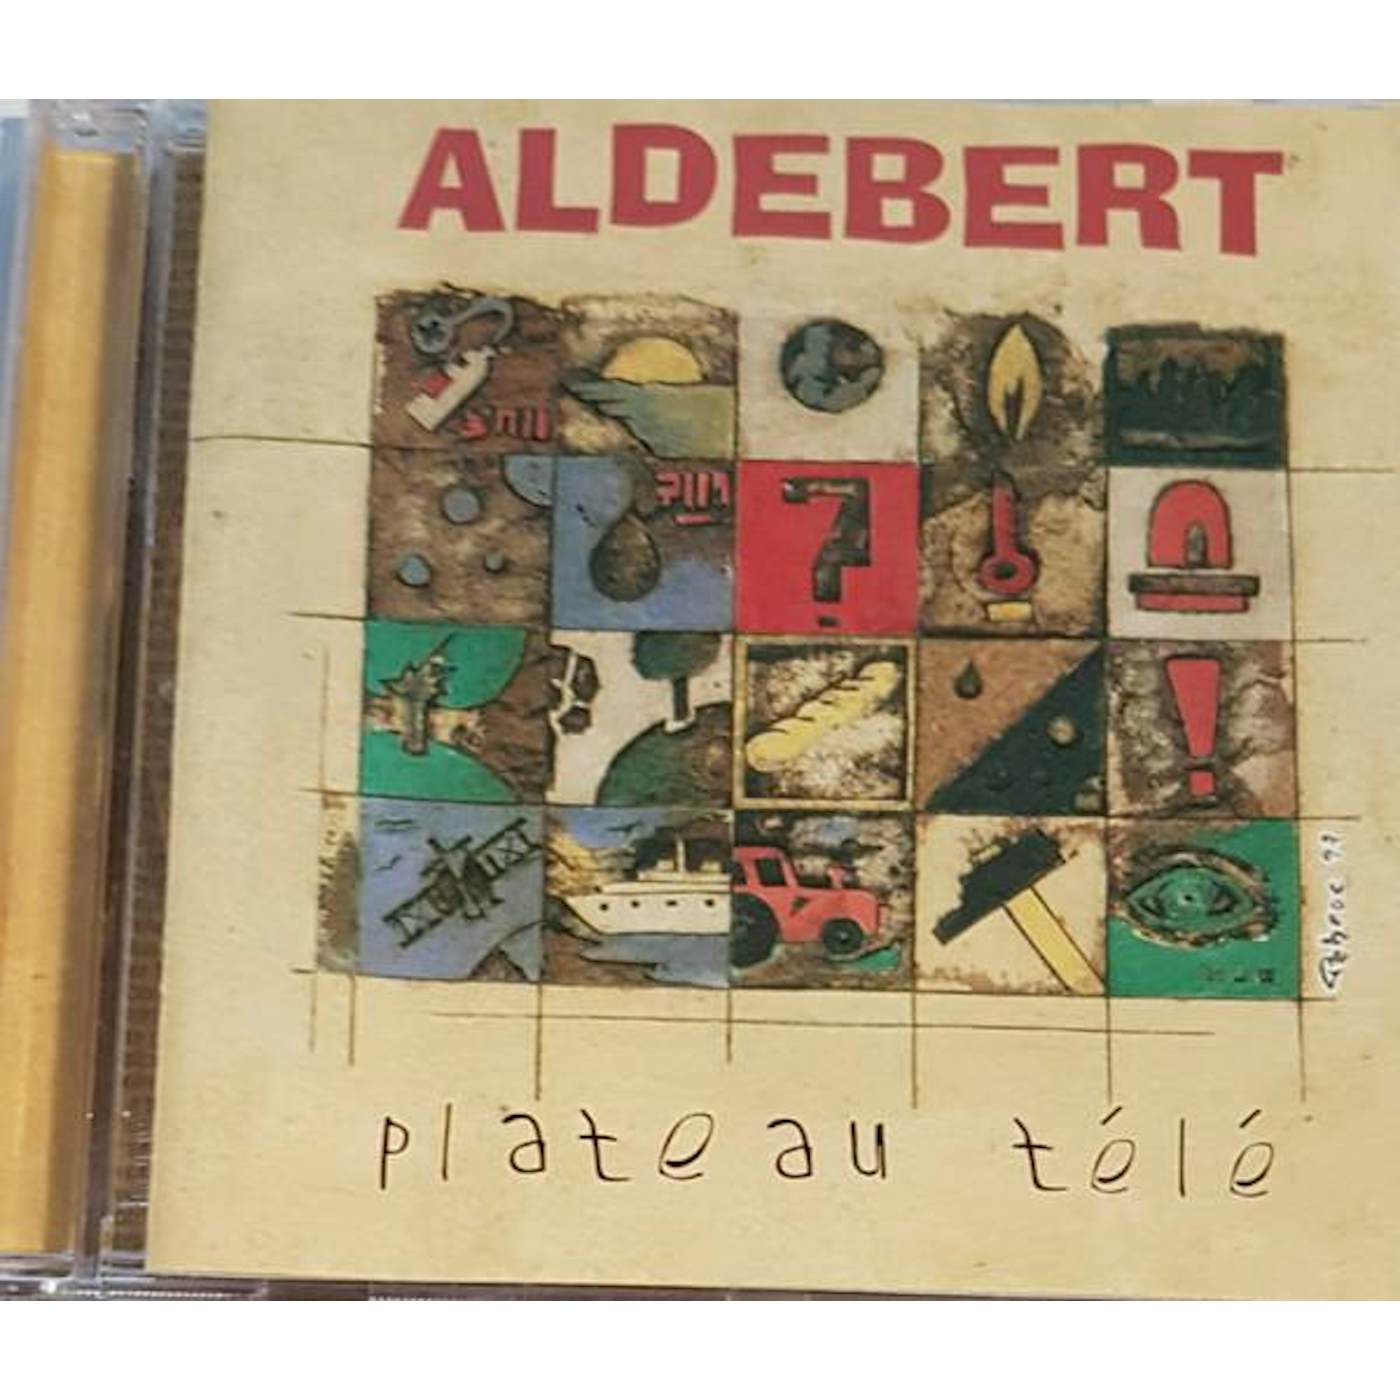 Aldebert PLATEAU TELE CD